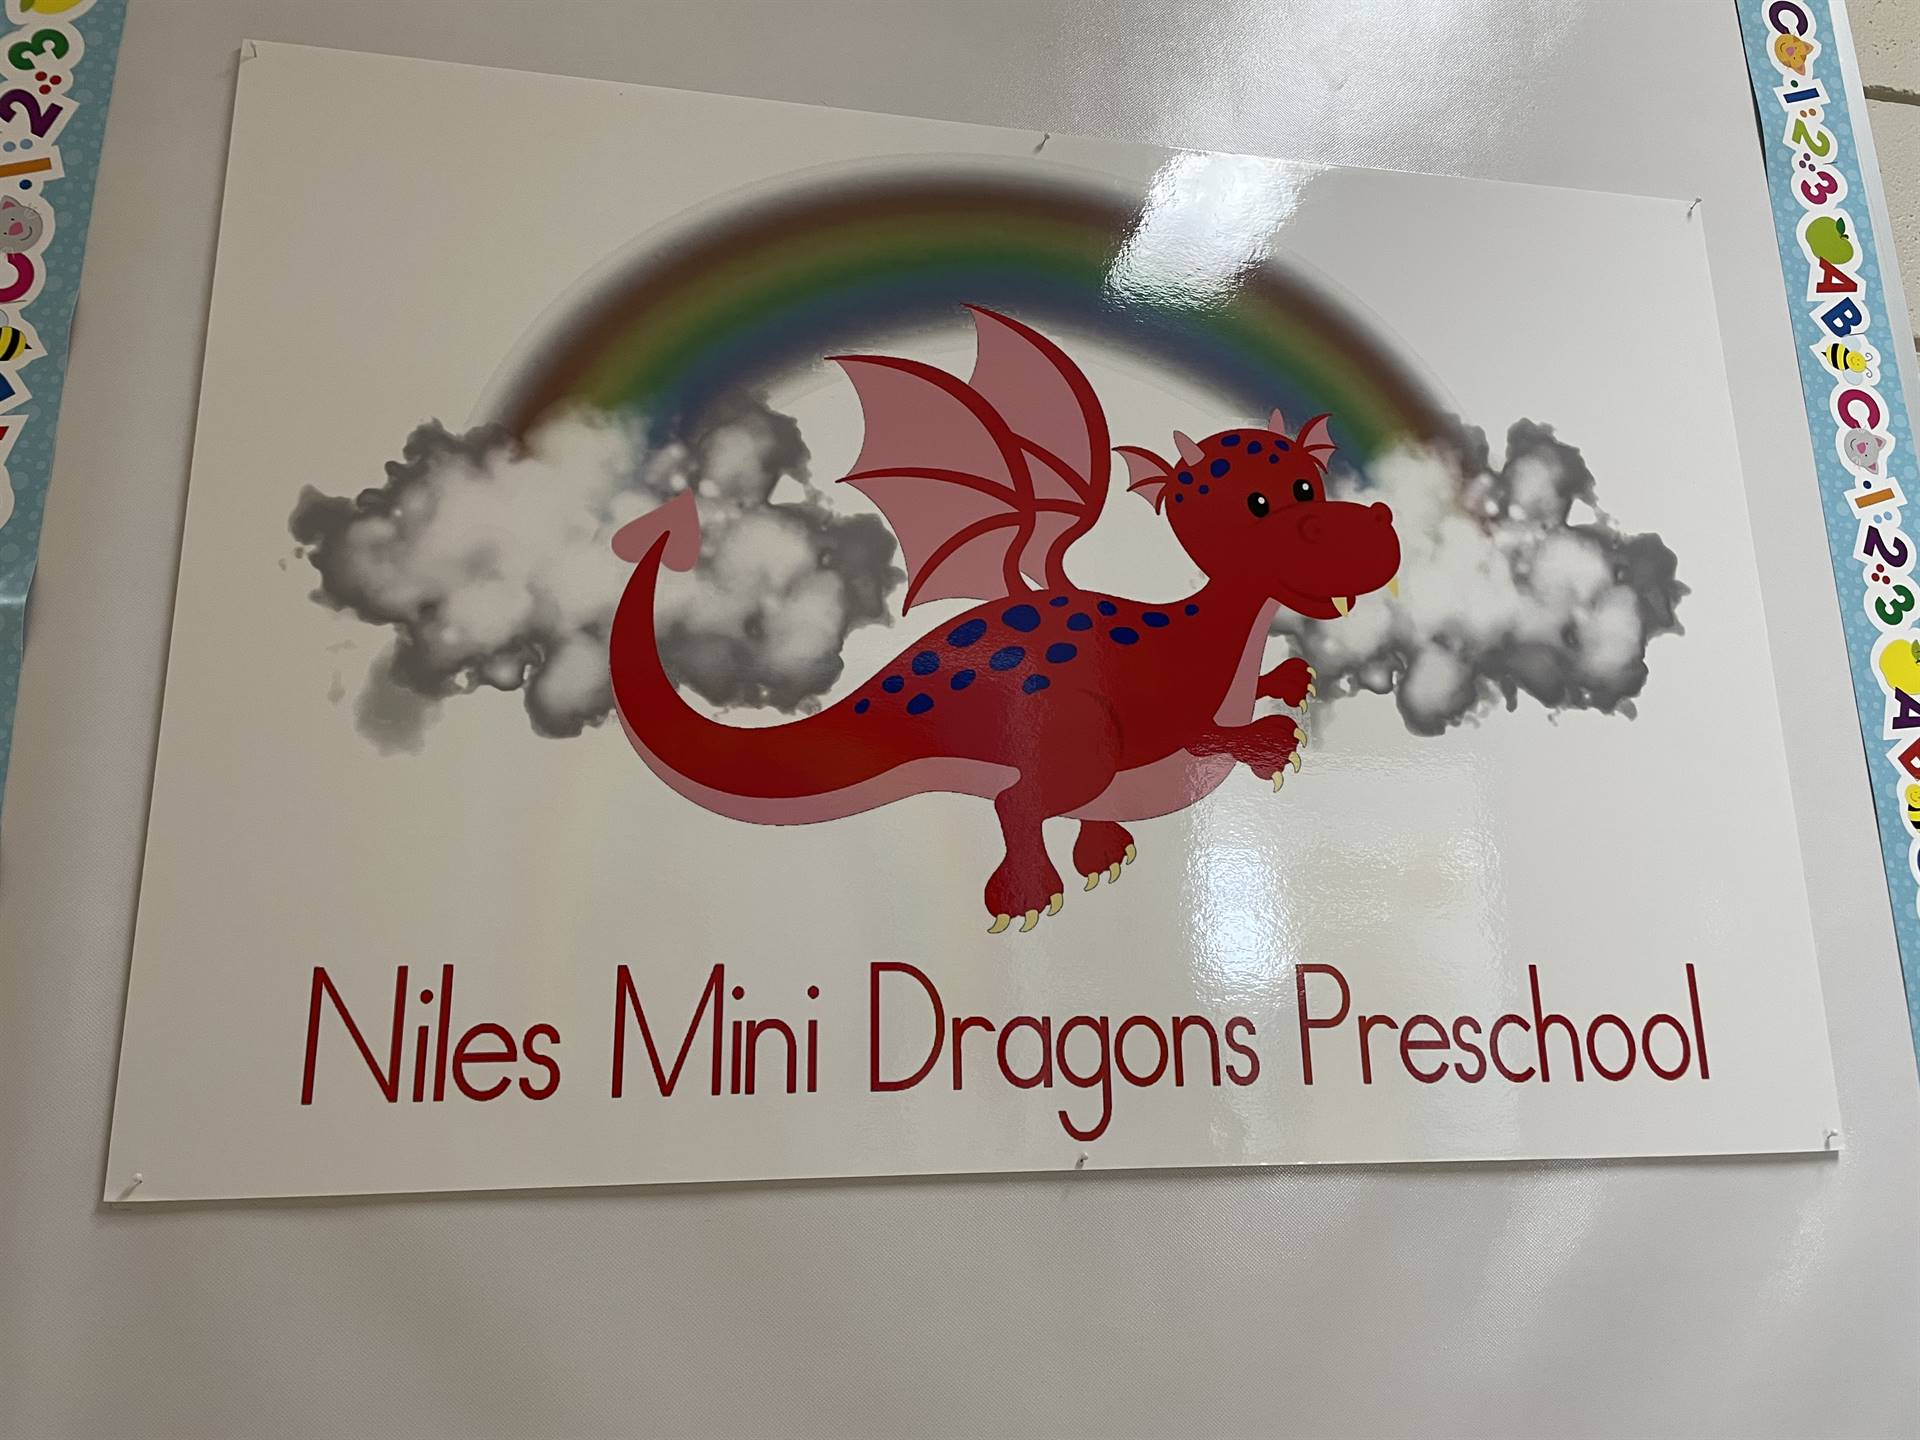 Welcome to Niles Mini Dragons Preschool!